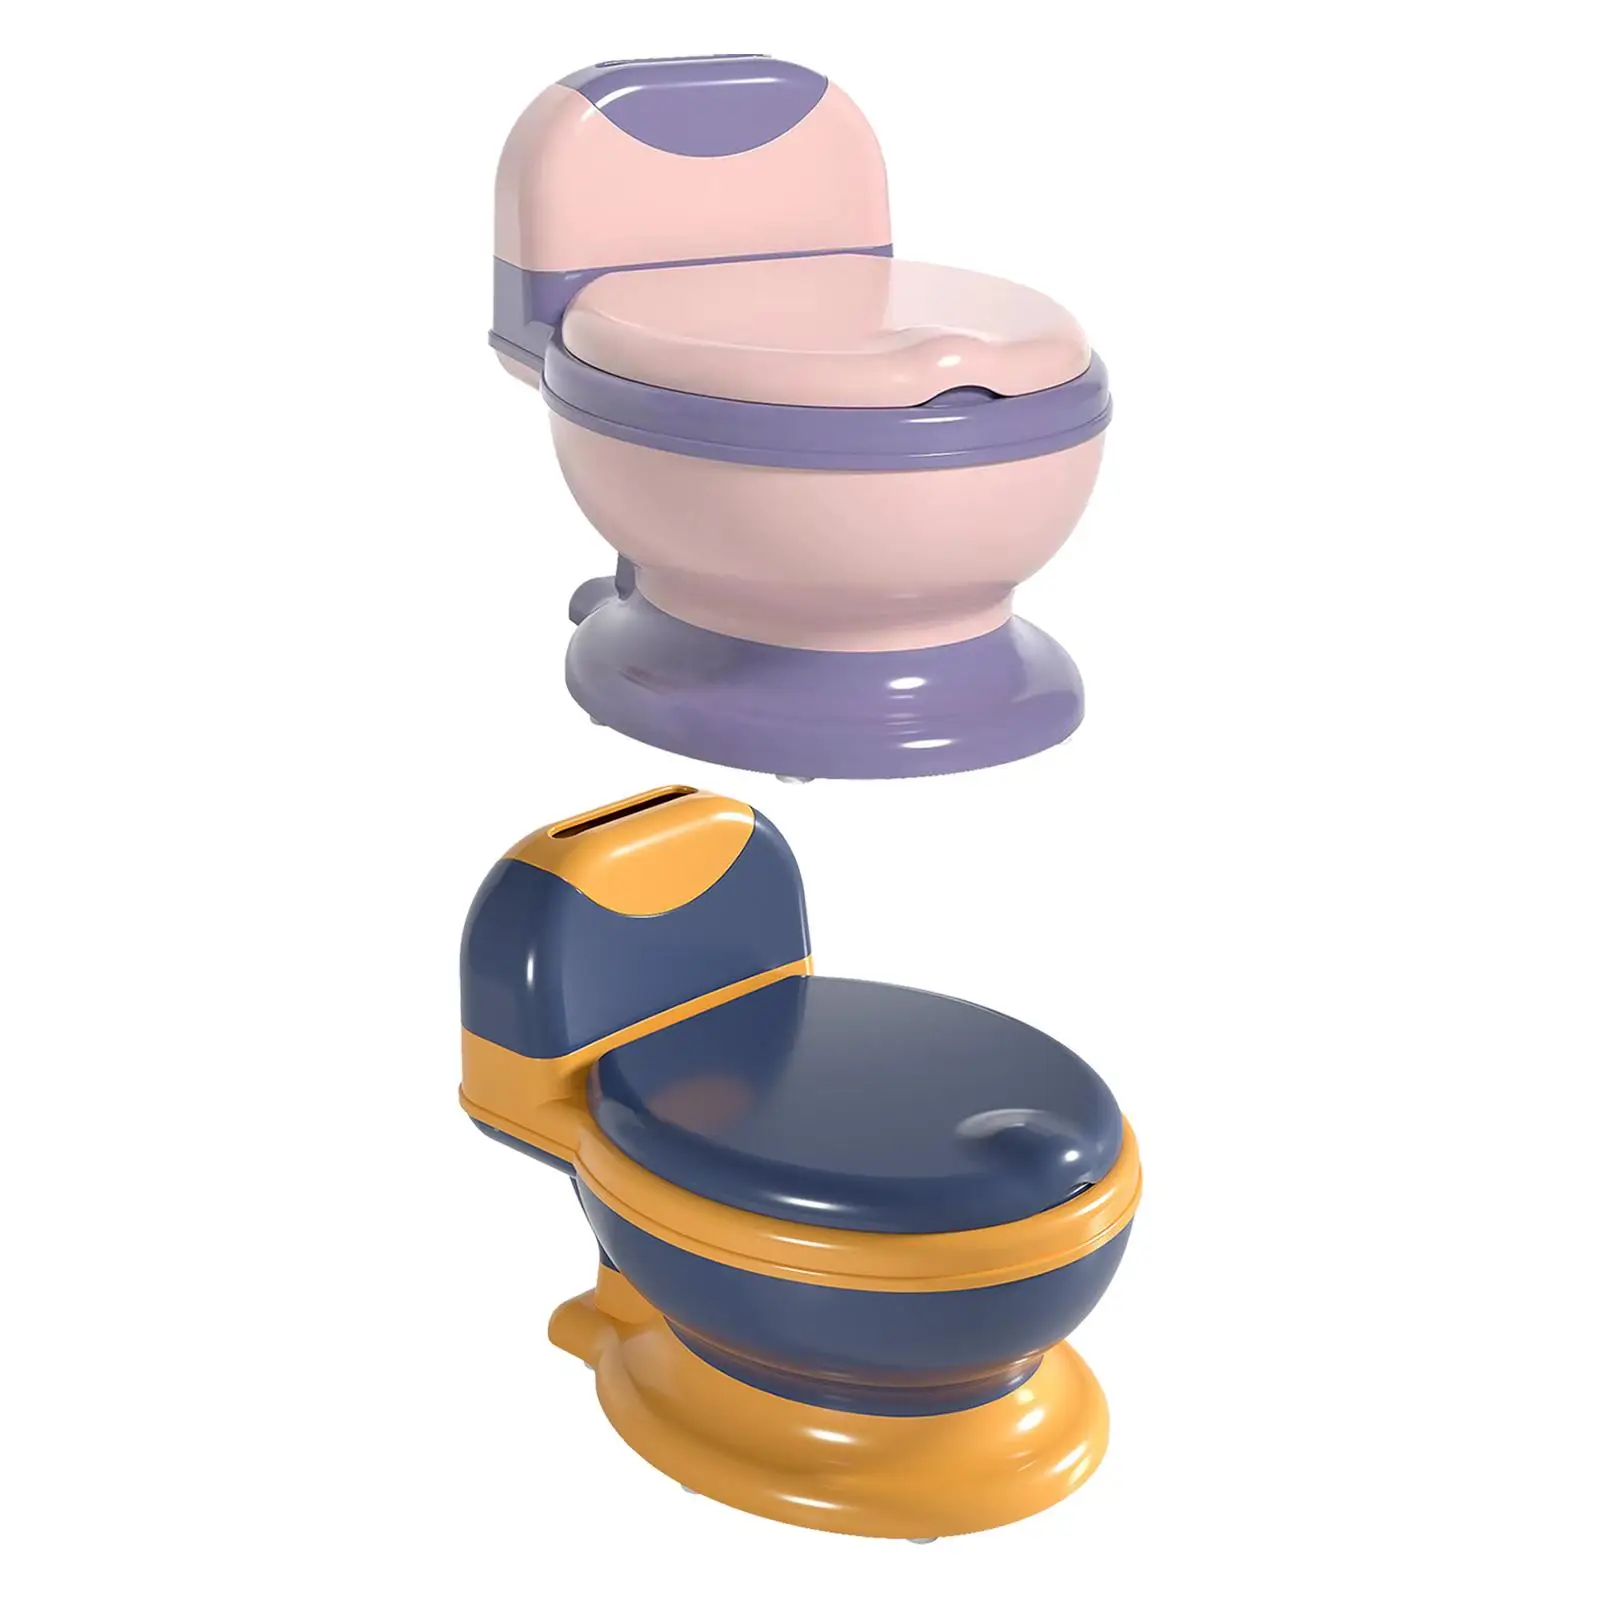 Potty Train Toilet Comfortable Toilet Training Seat Potty Seat Detachable Realistic Toilet for Boys Girls Baby Children Kids